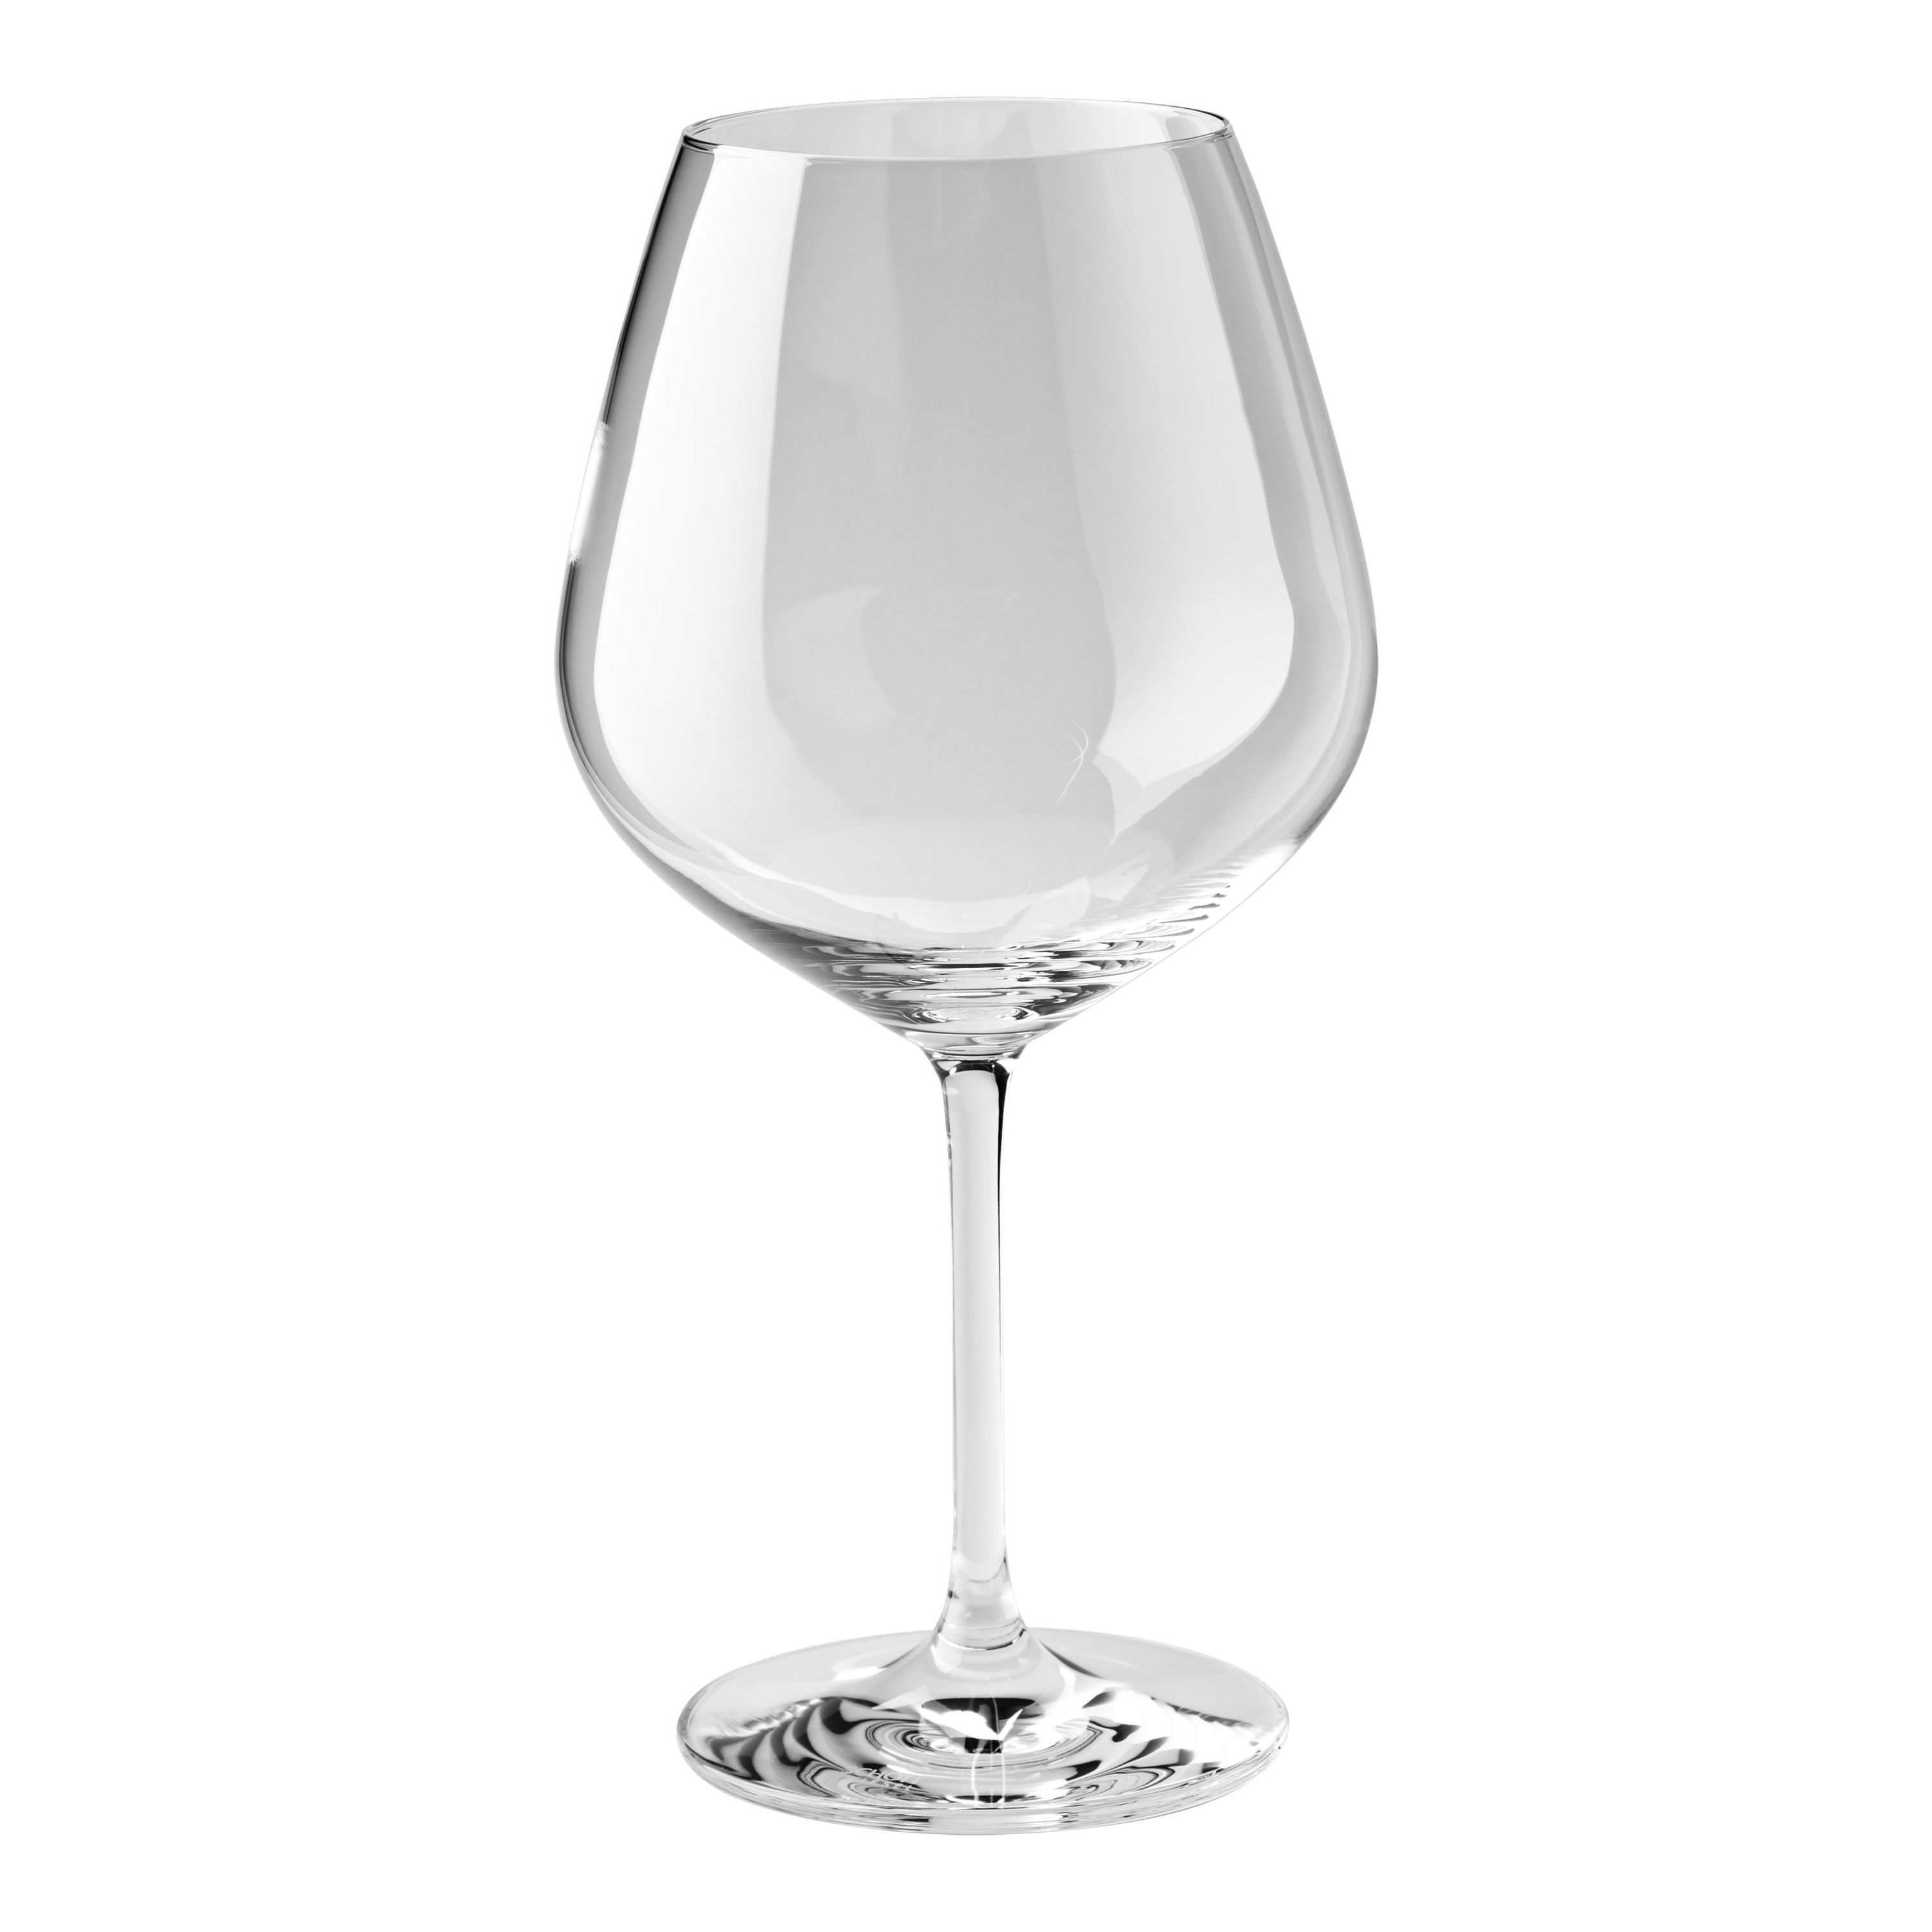 Buy ZWILLING Prédicat Glassware White wine glass set